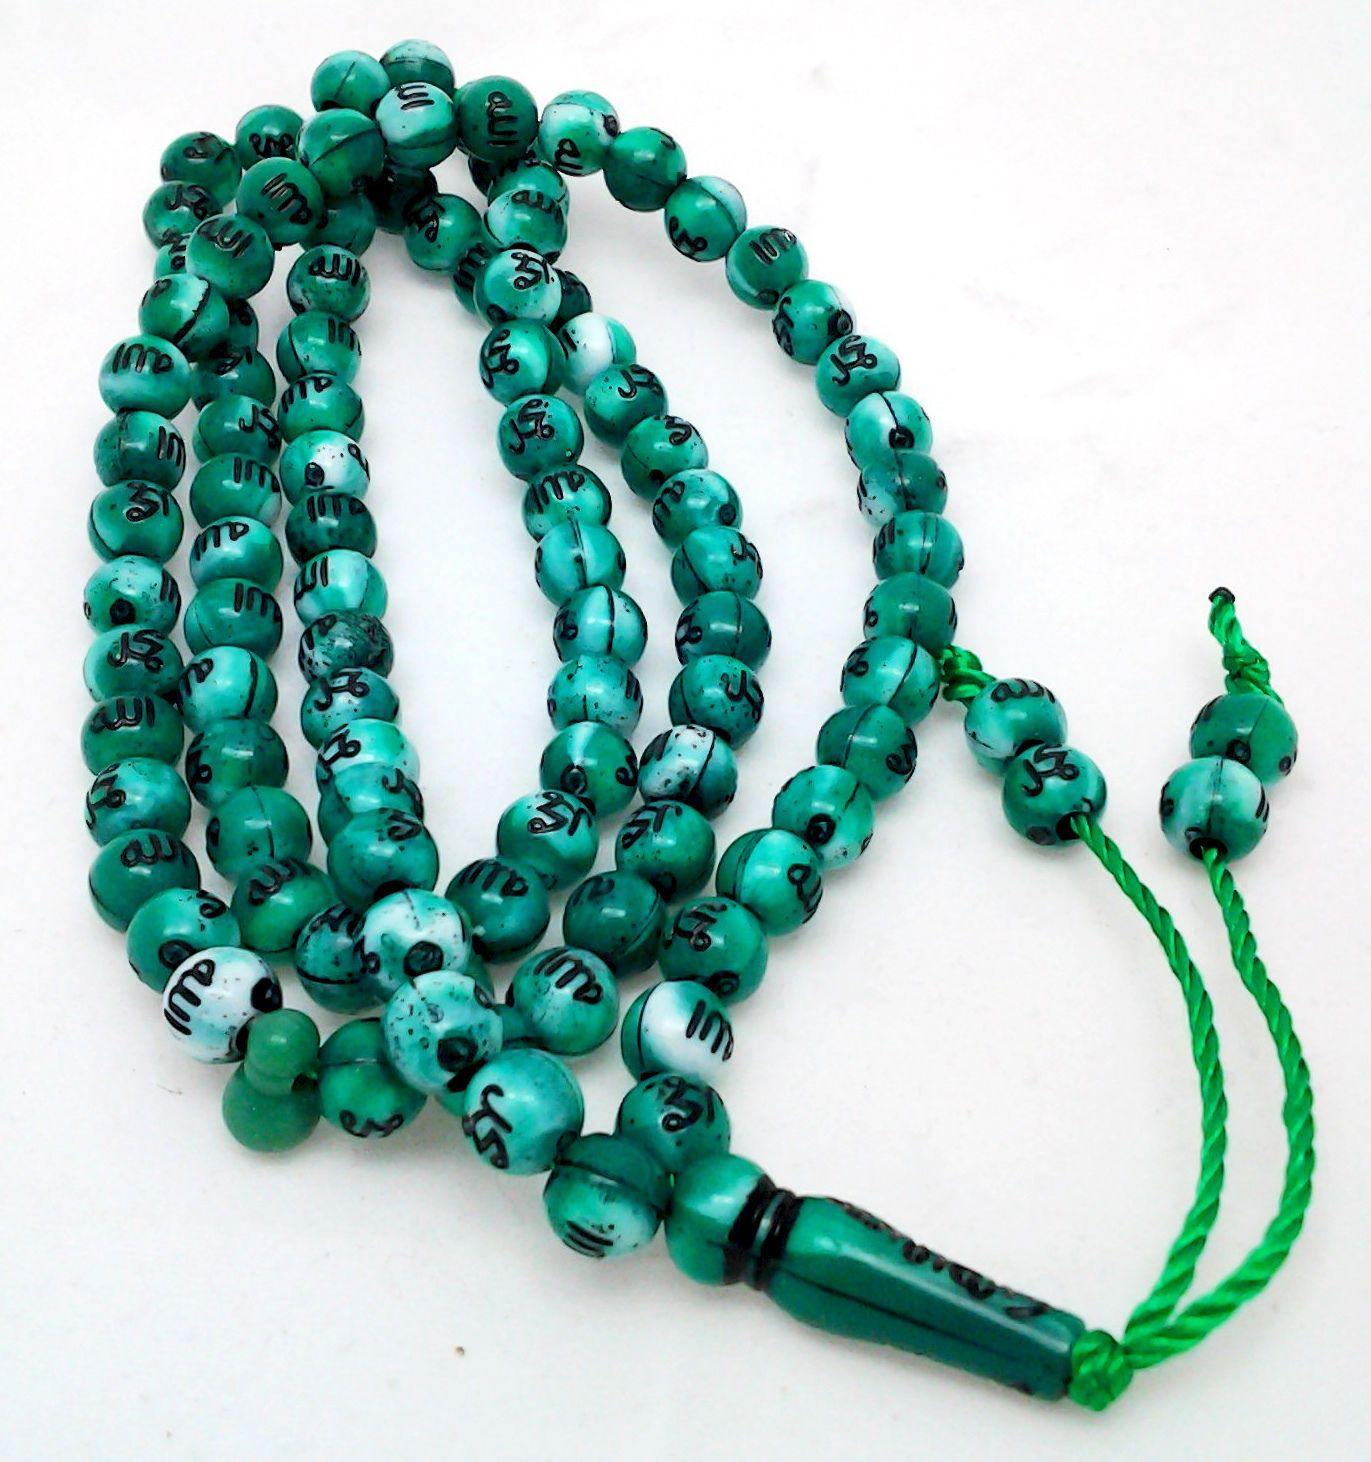 New Islamic Salah 6mm Small Prayer Beads 99 Misbaha - Arabian Shopping Zone